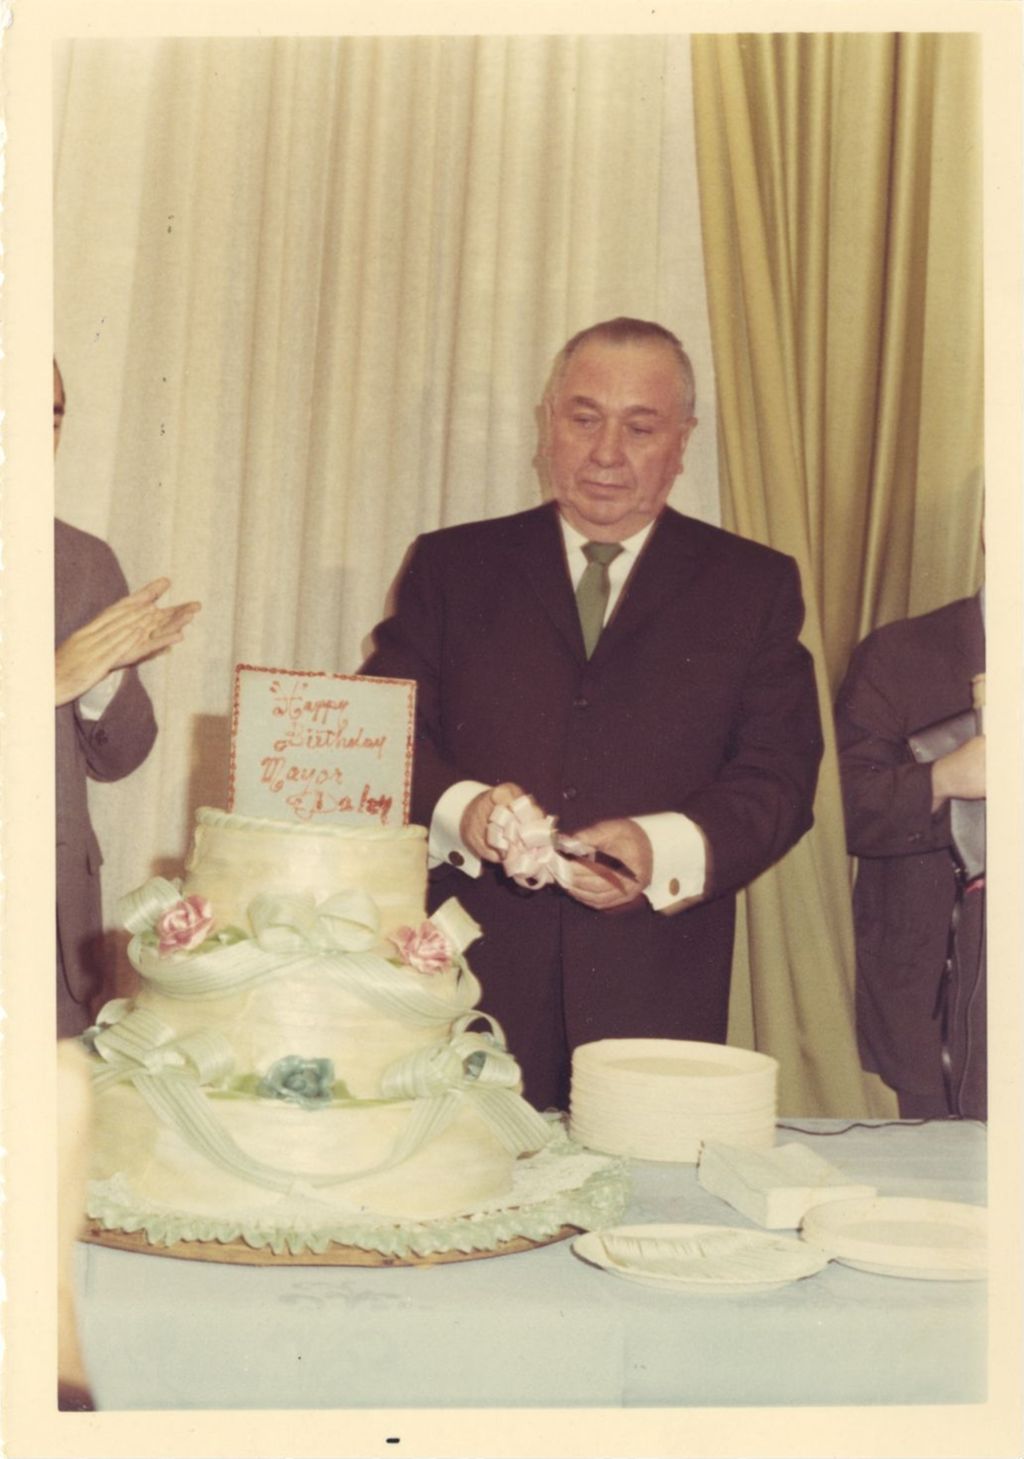 Richard J. Daley with his birthday cake